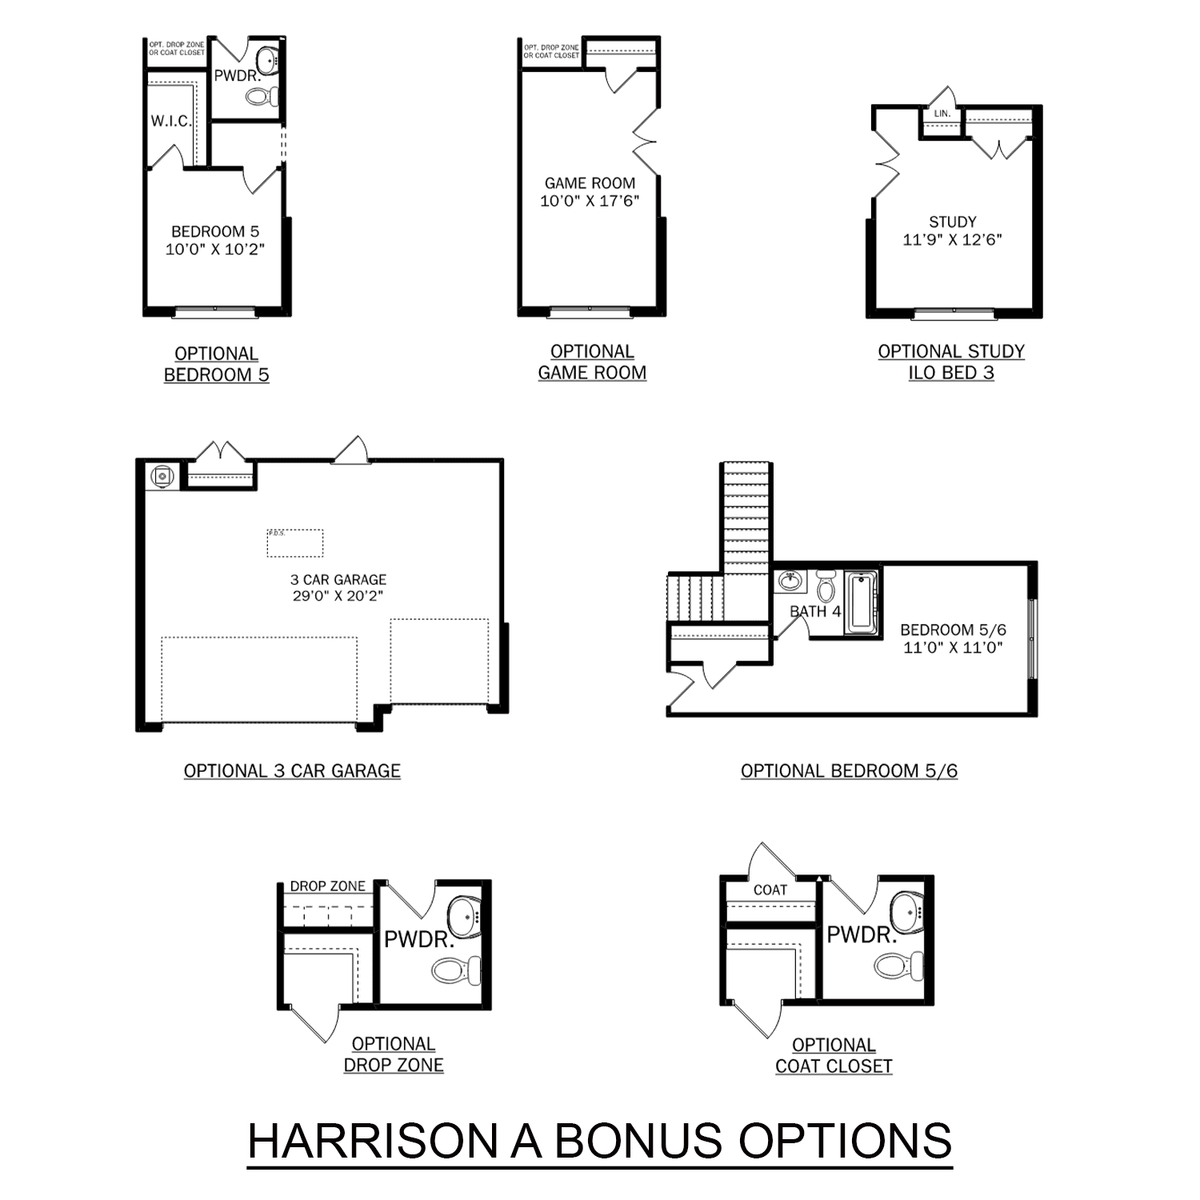 3 - The Harrison with Bonus buildable floor plan layout in Davidson Homes' Barnett's Crossing community.